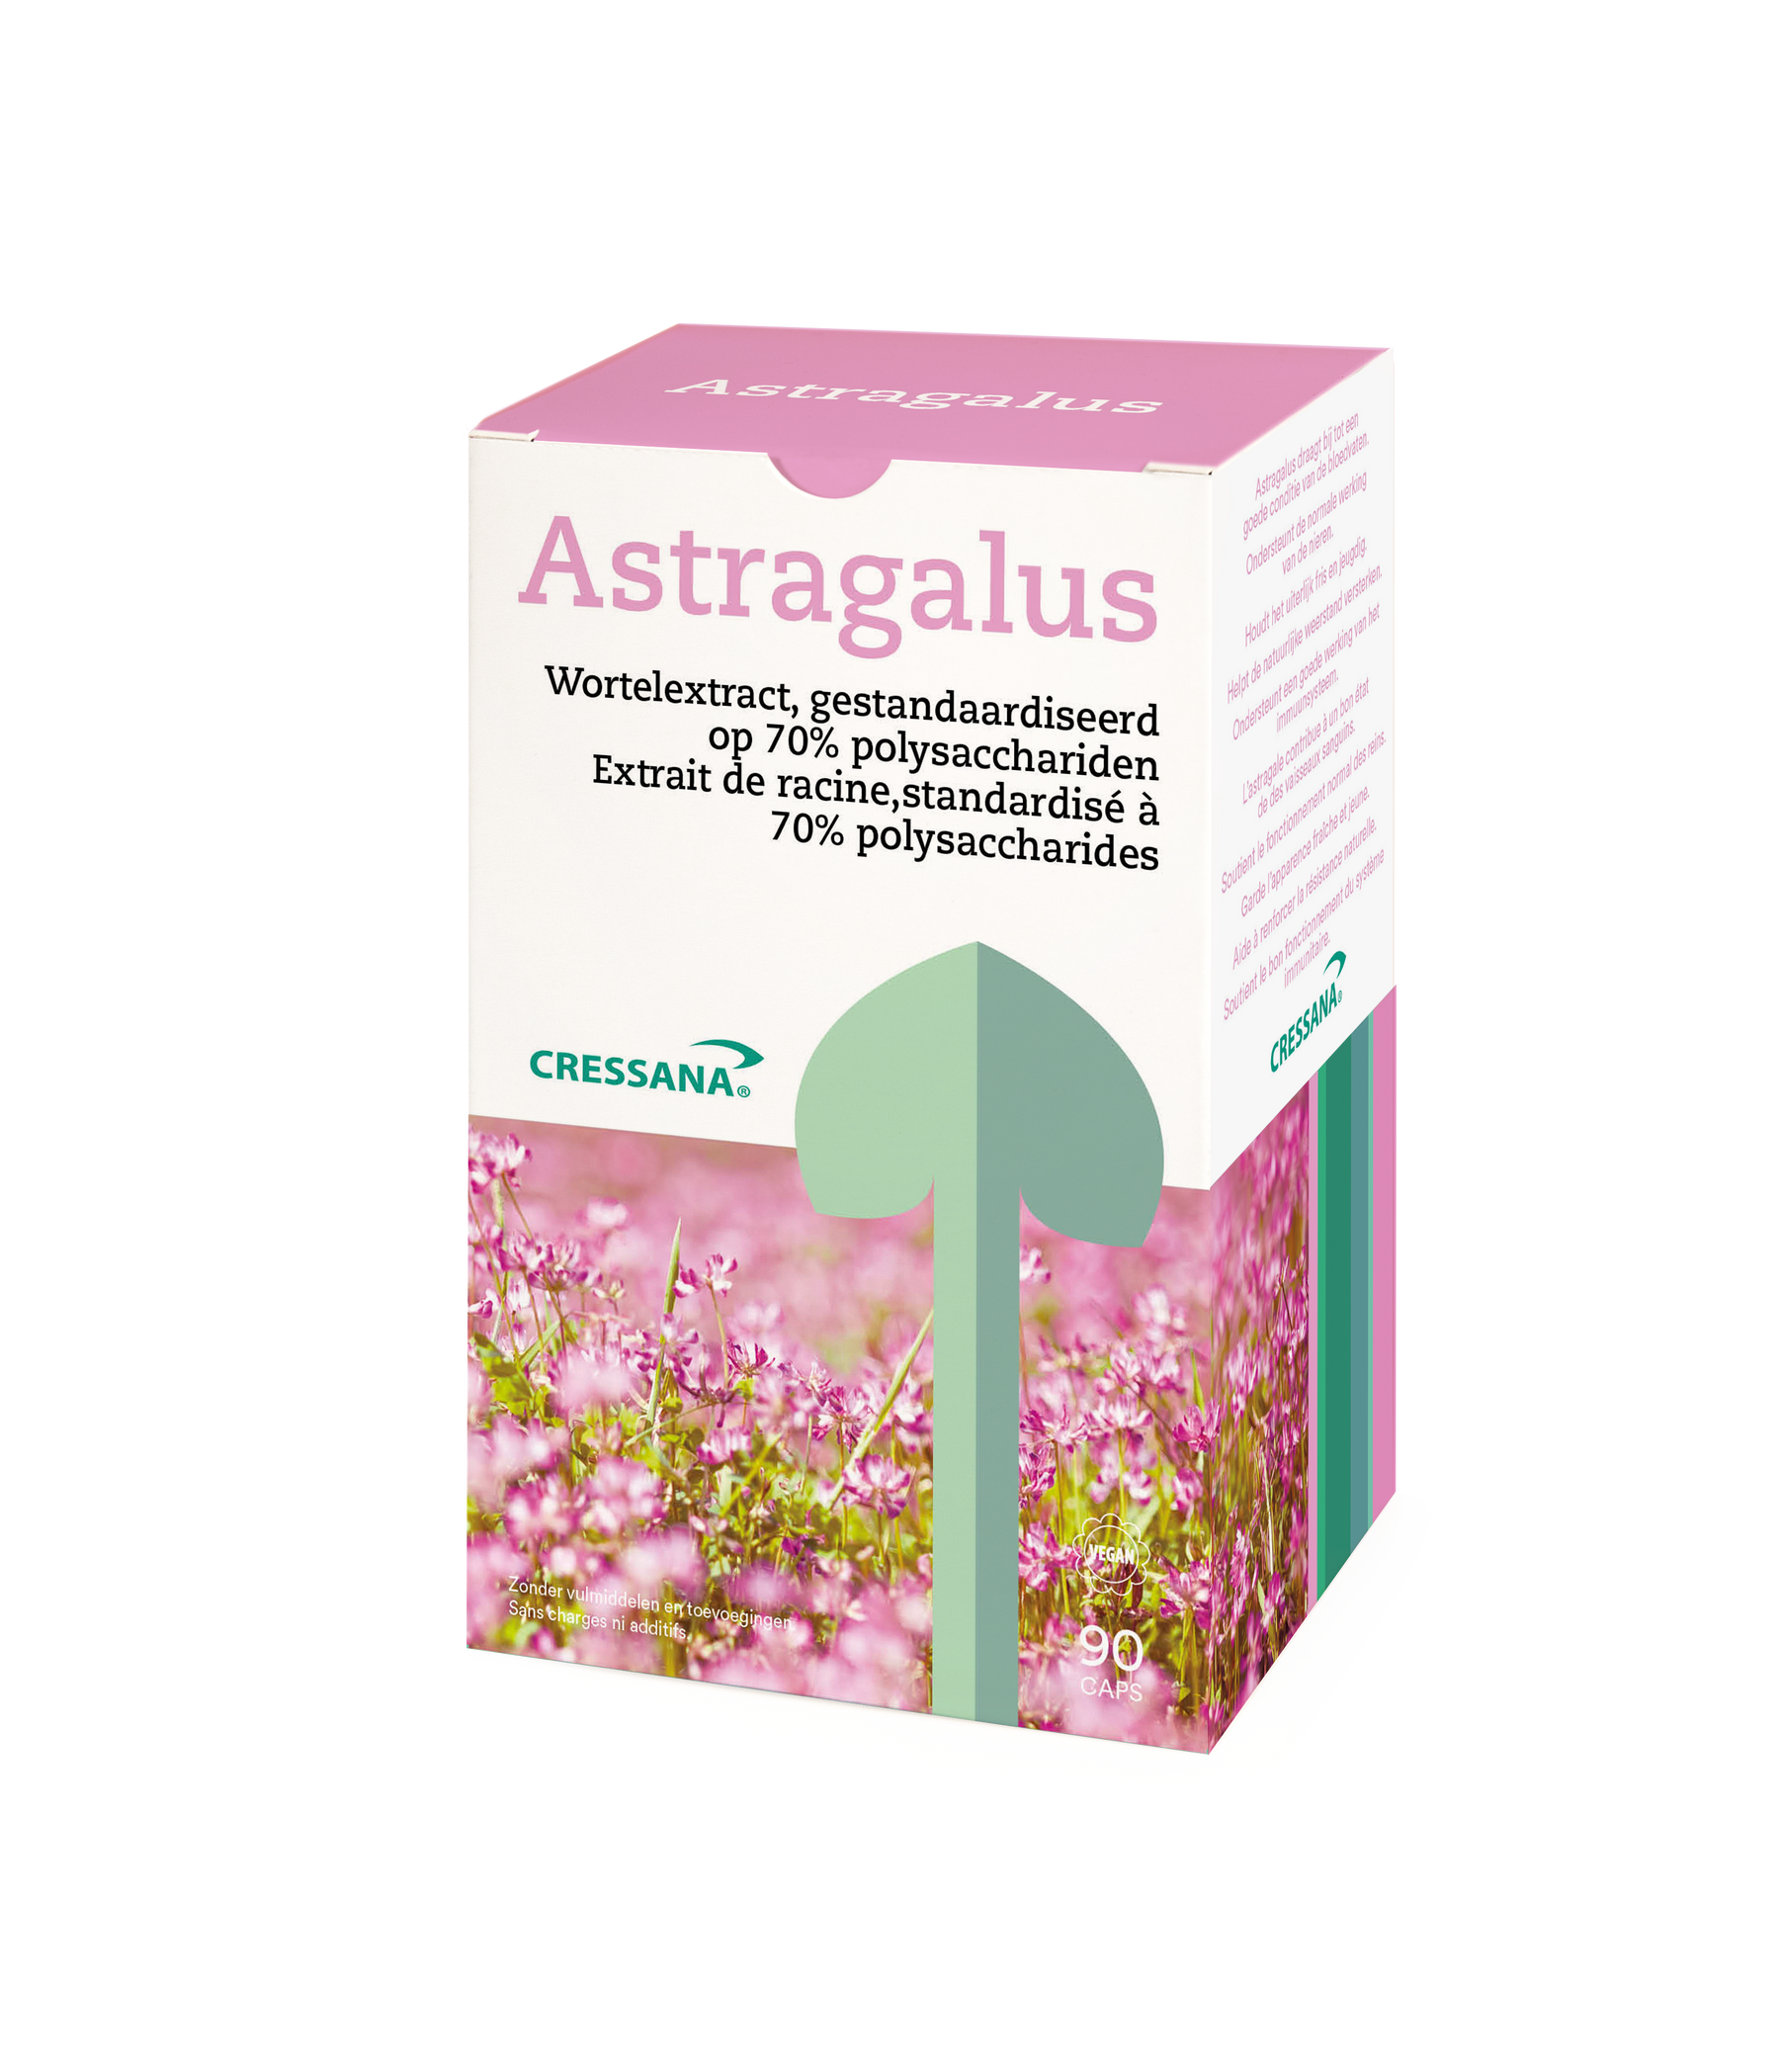 Astragalus Cressana® Nederland